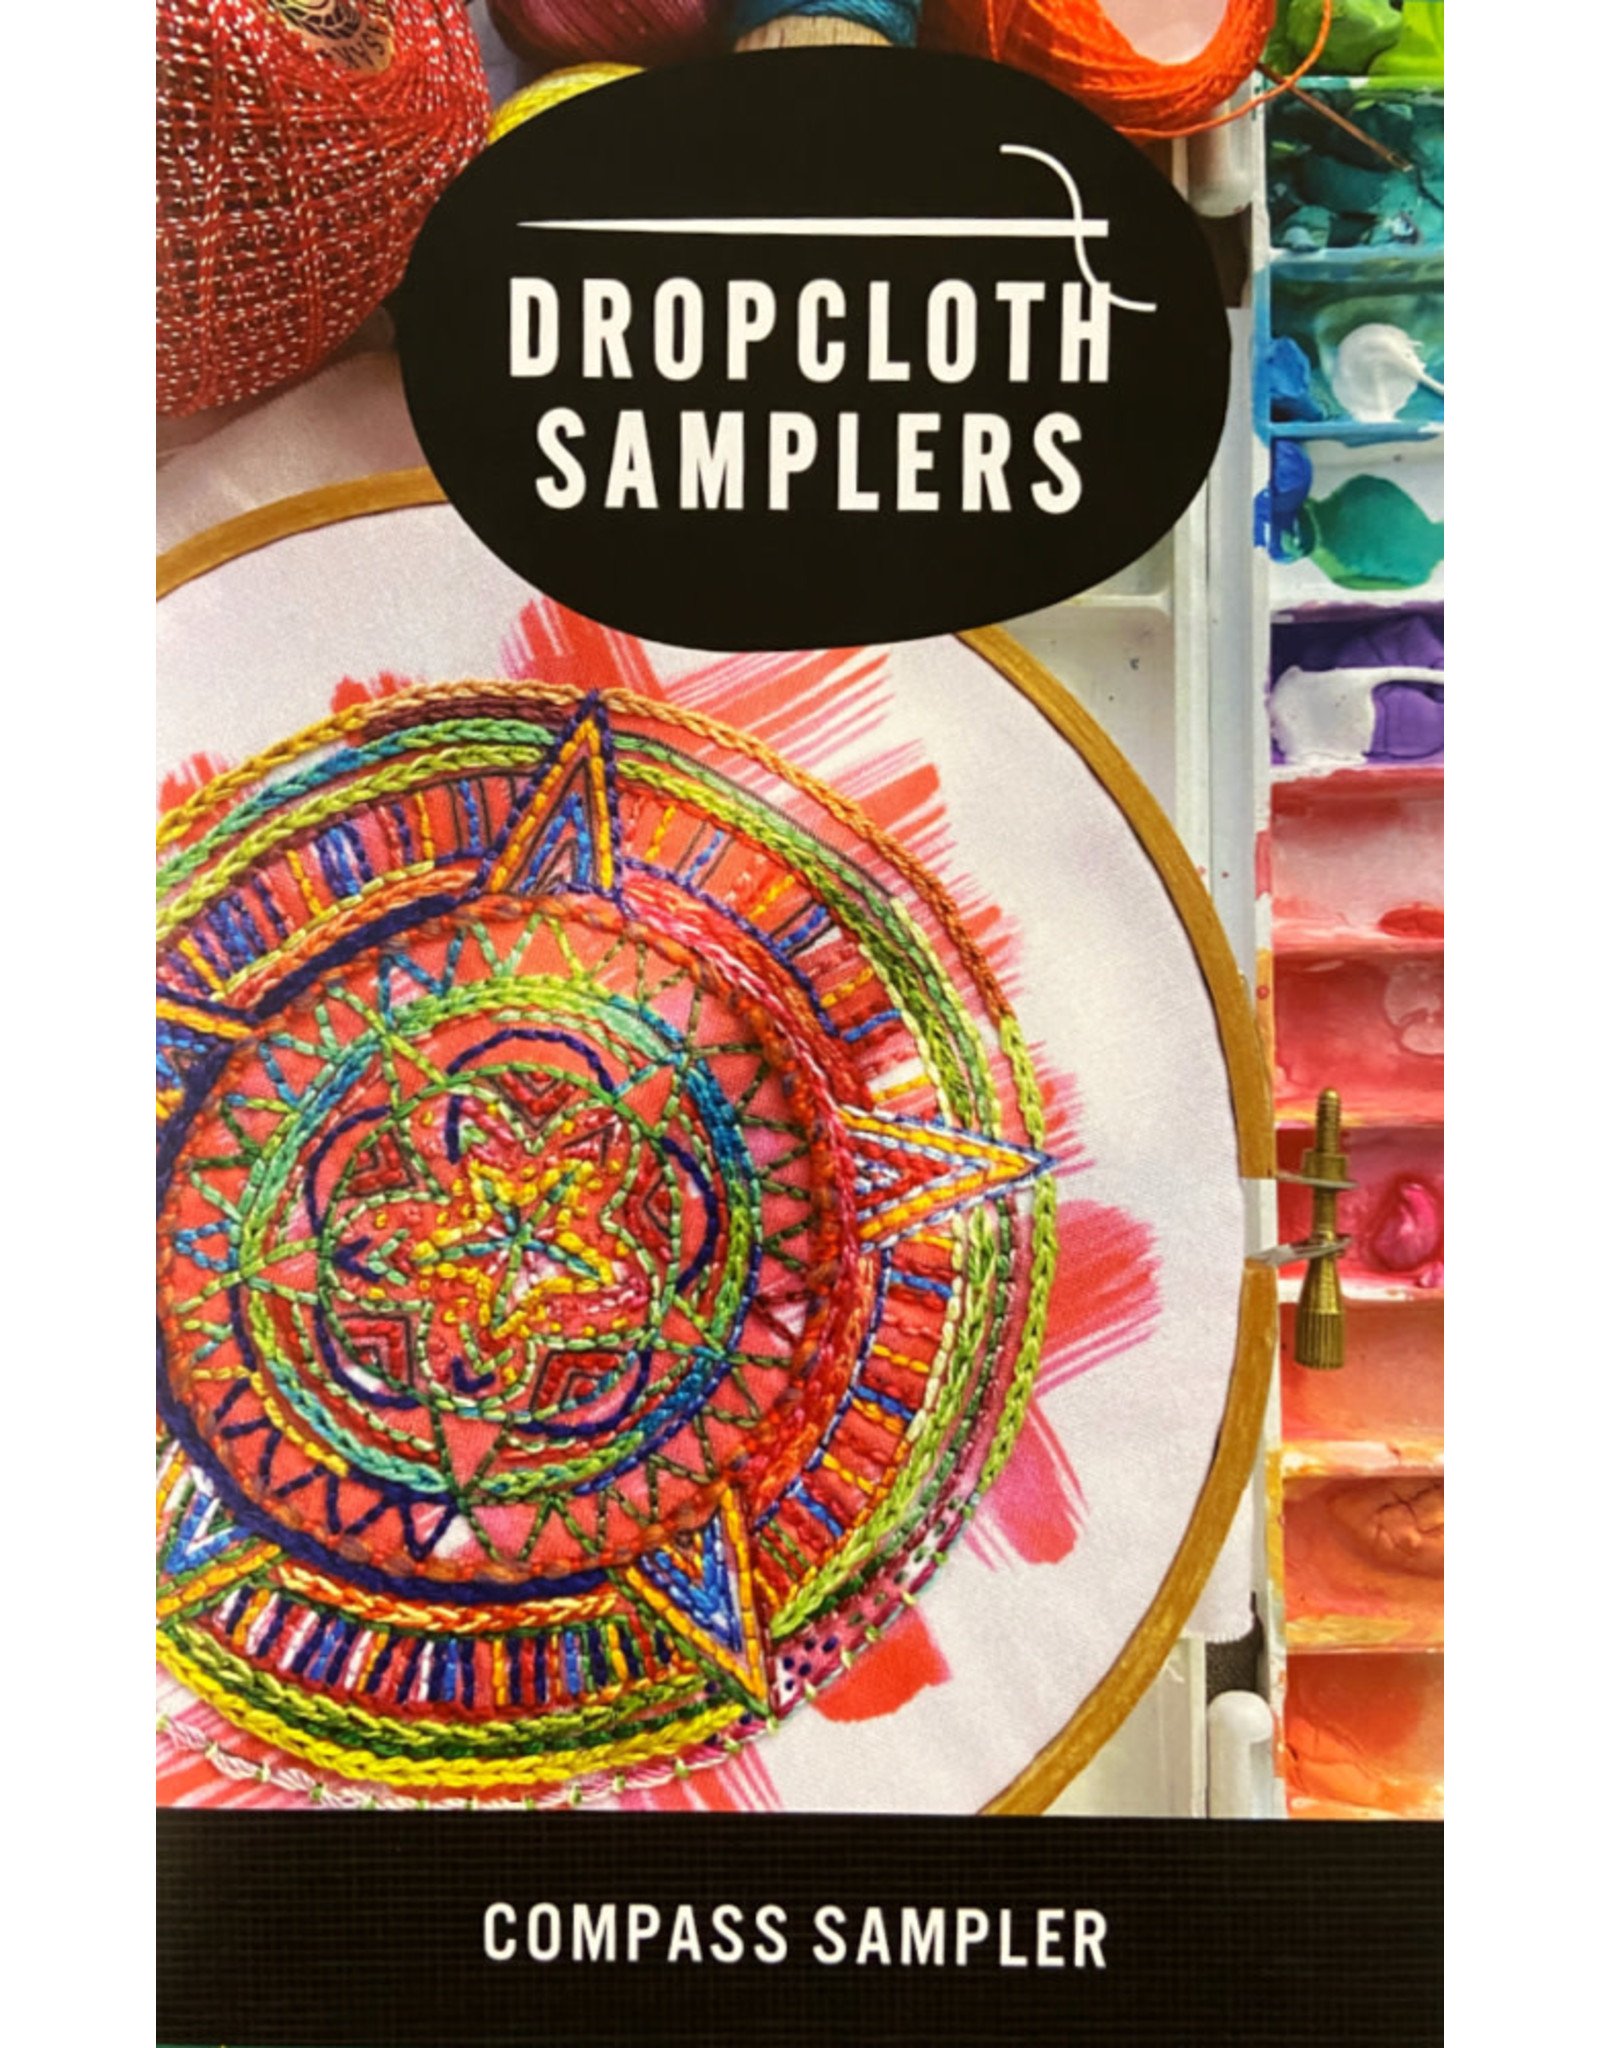 Dropcloth Samplers Compass Sampler,  Embroidery Sampler